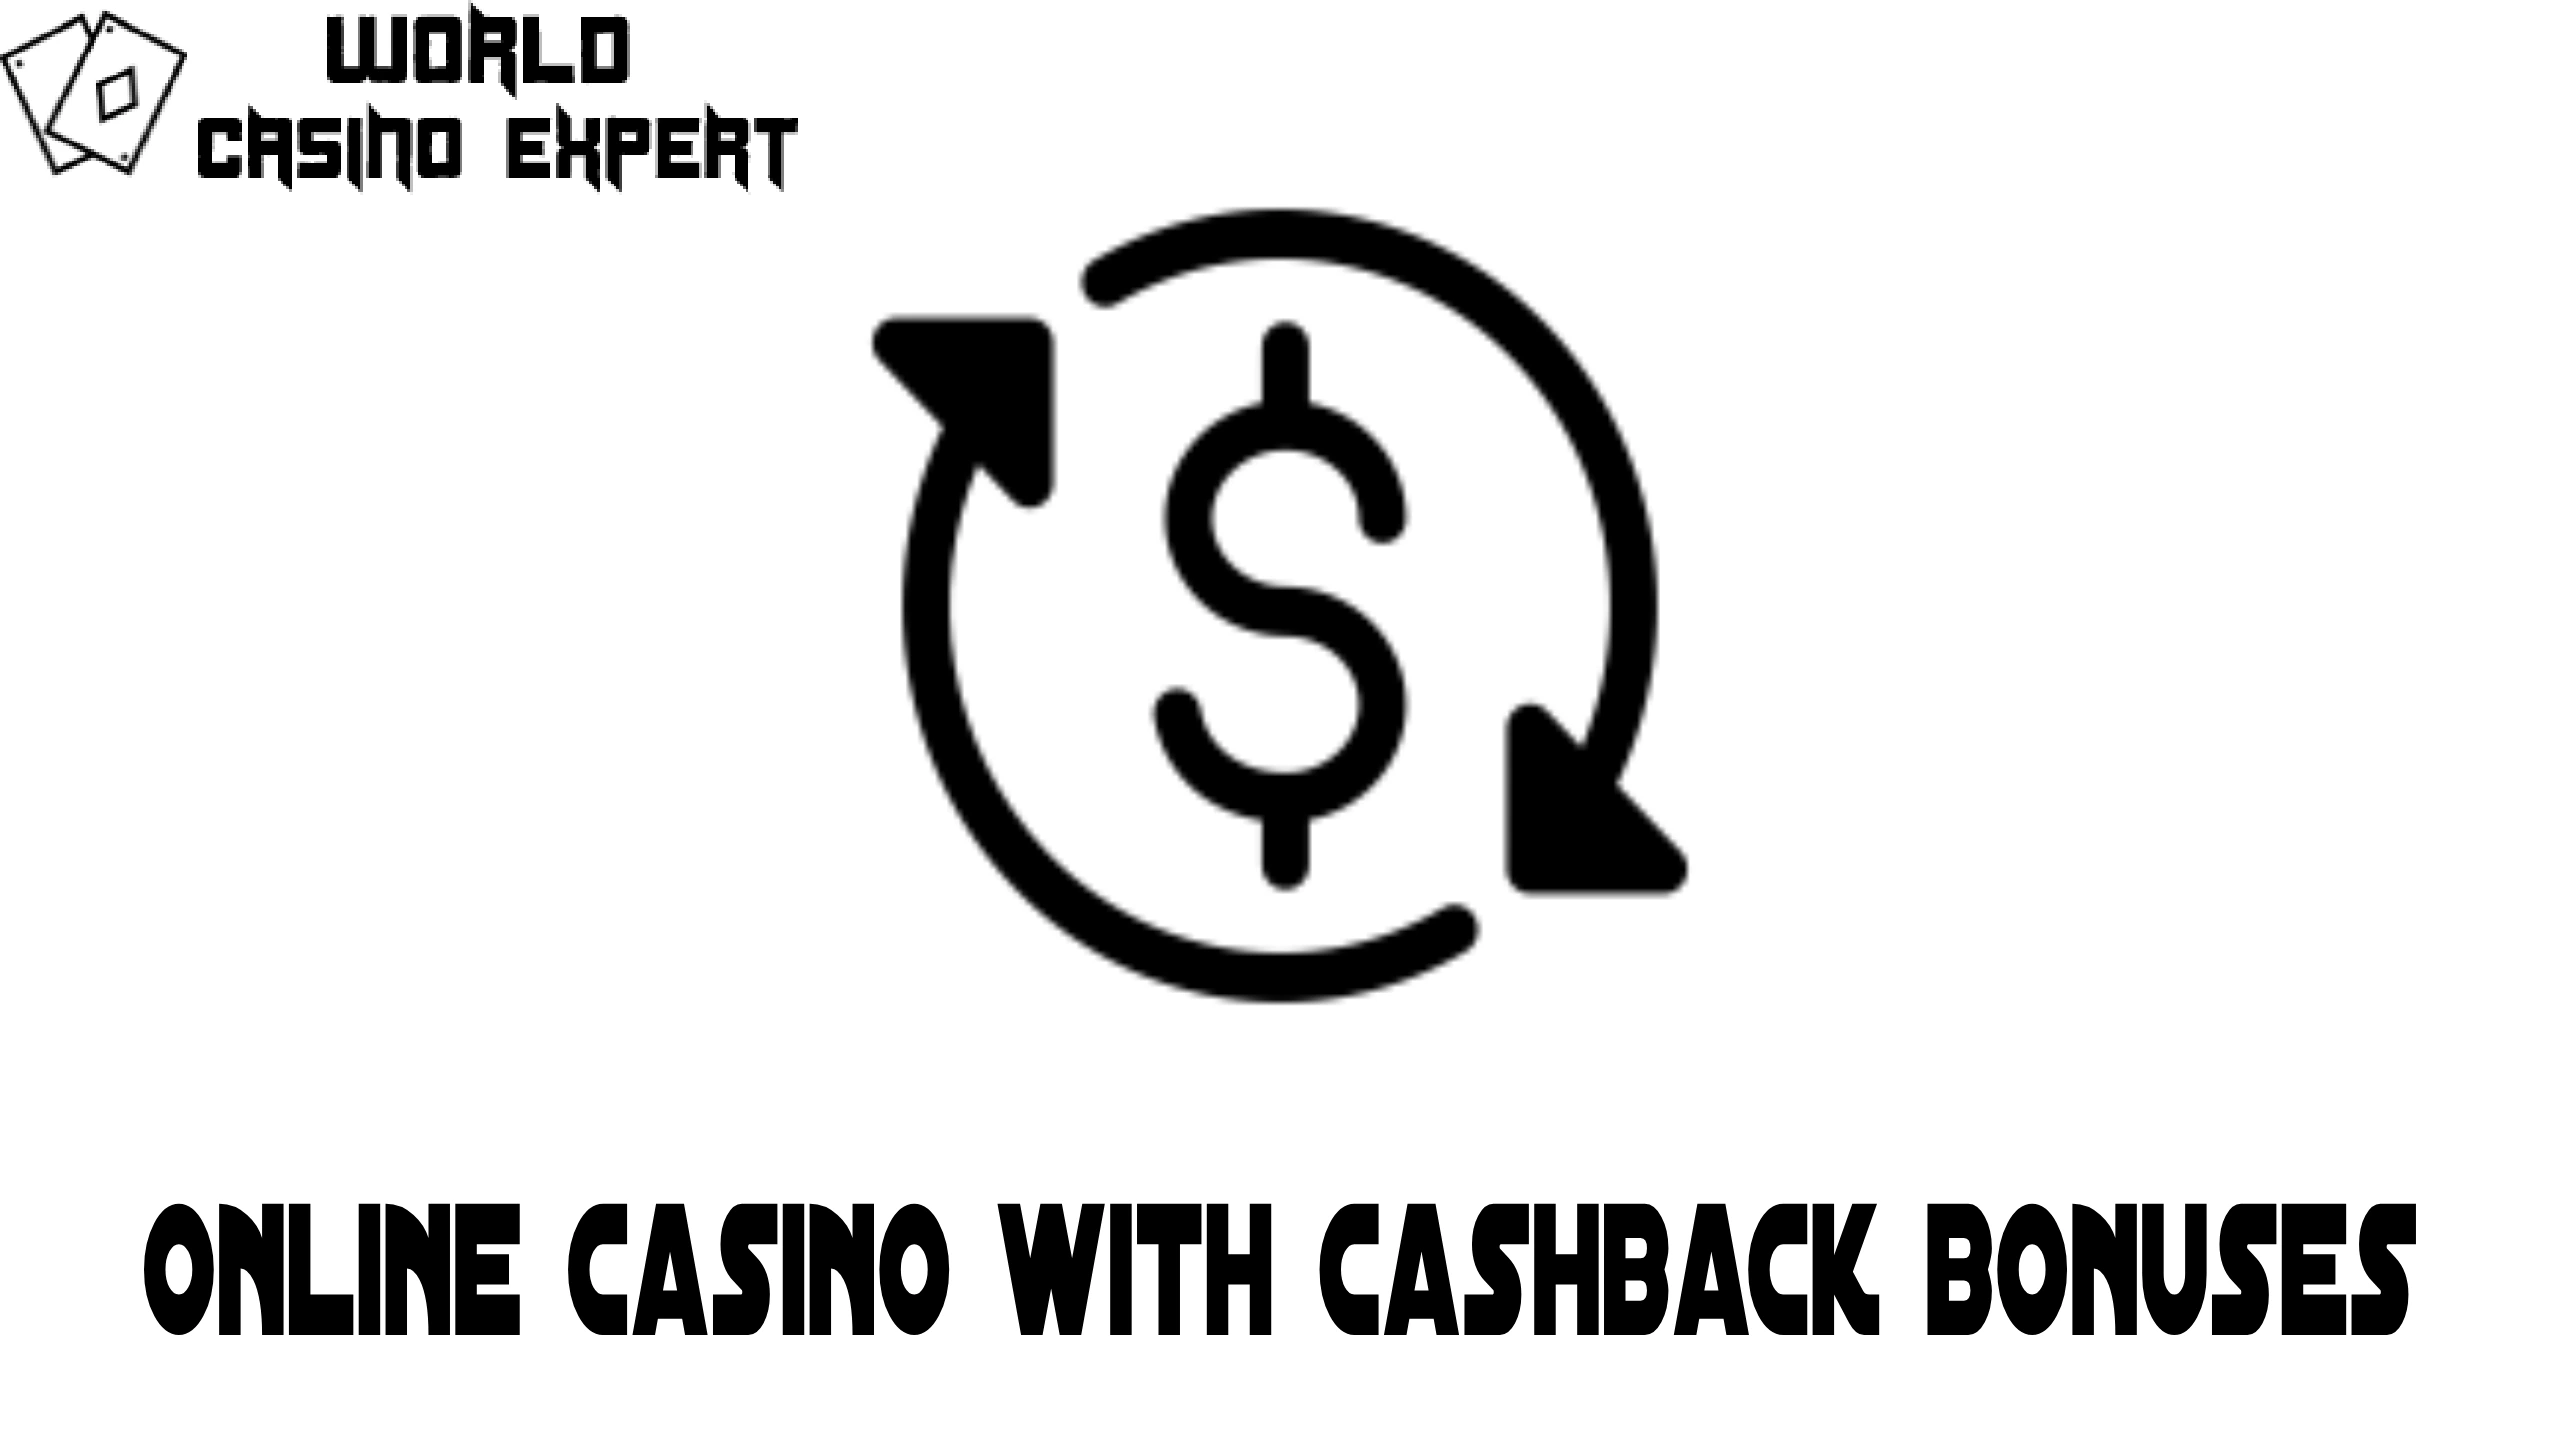 Casino with Cashback bonuses | World Casino Expert